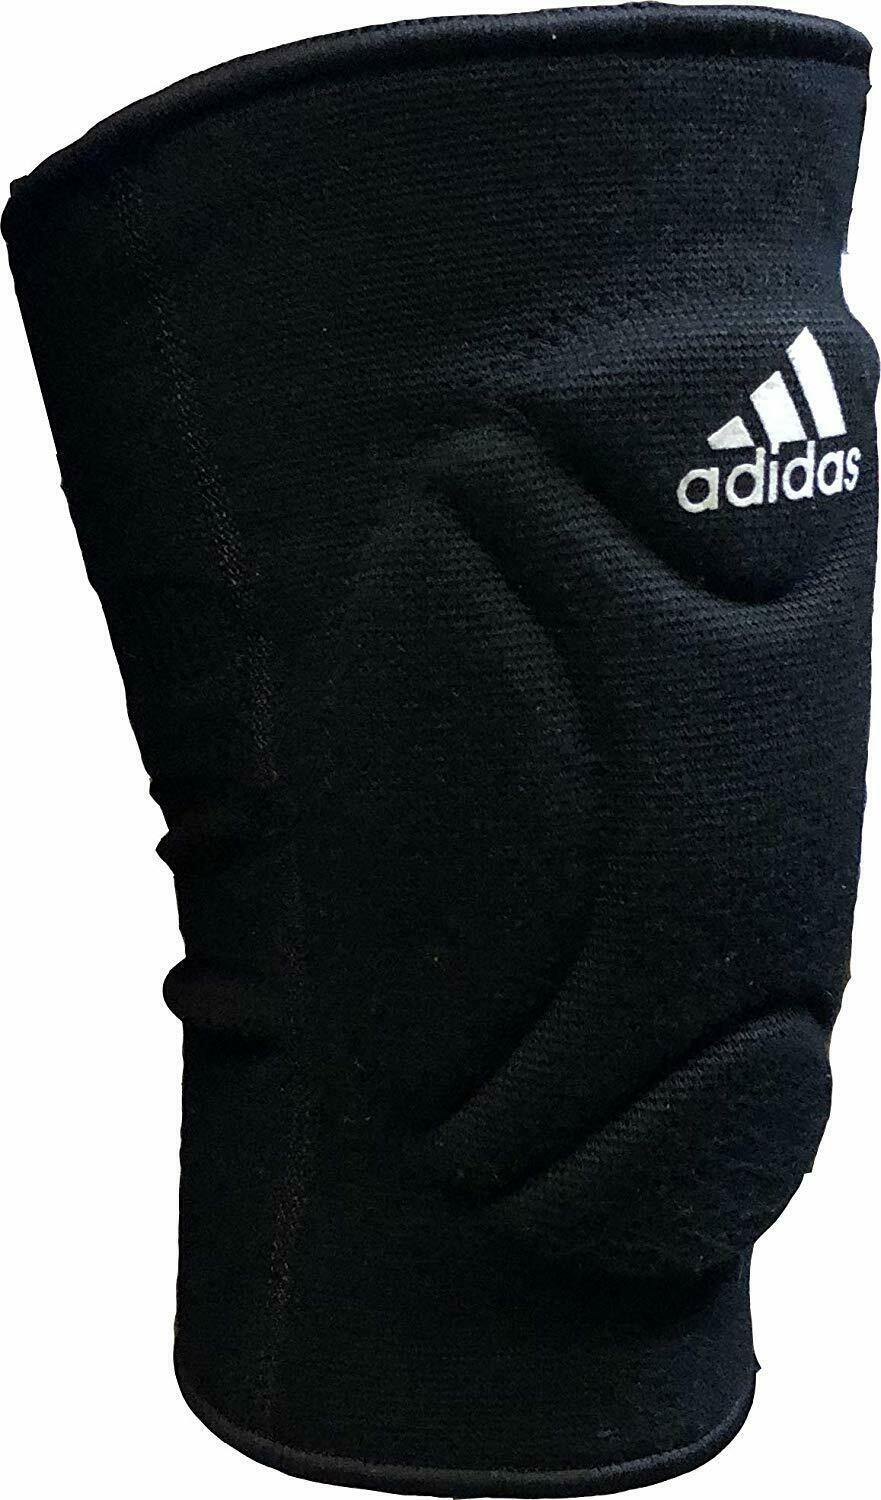 Adidas | aK103 | Wrestling Reversible Knee Pad Black Mesh Back  | ALL SIZES - Great Call Athletics